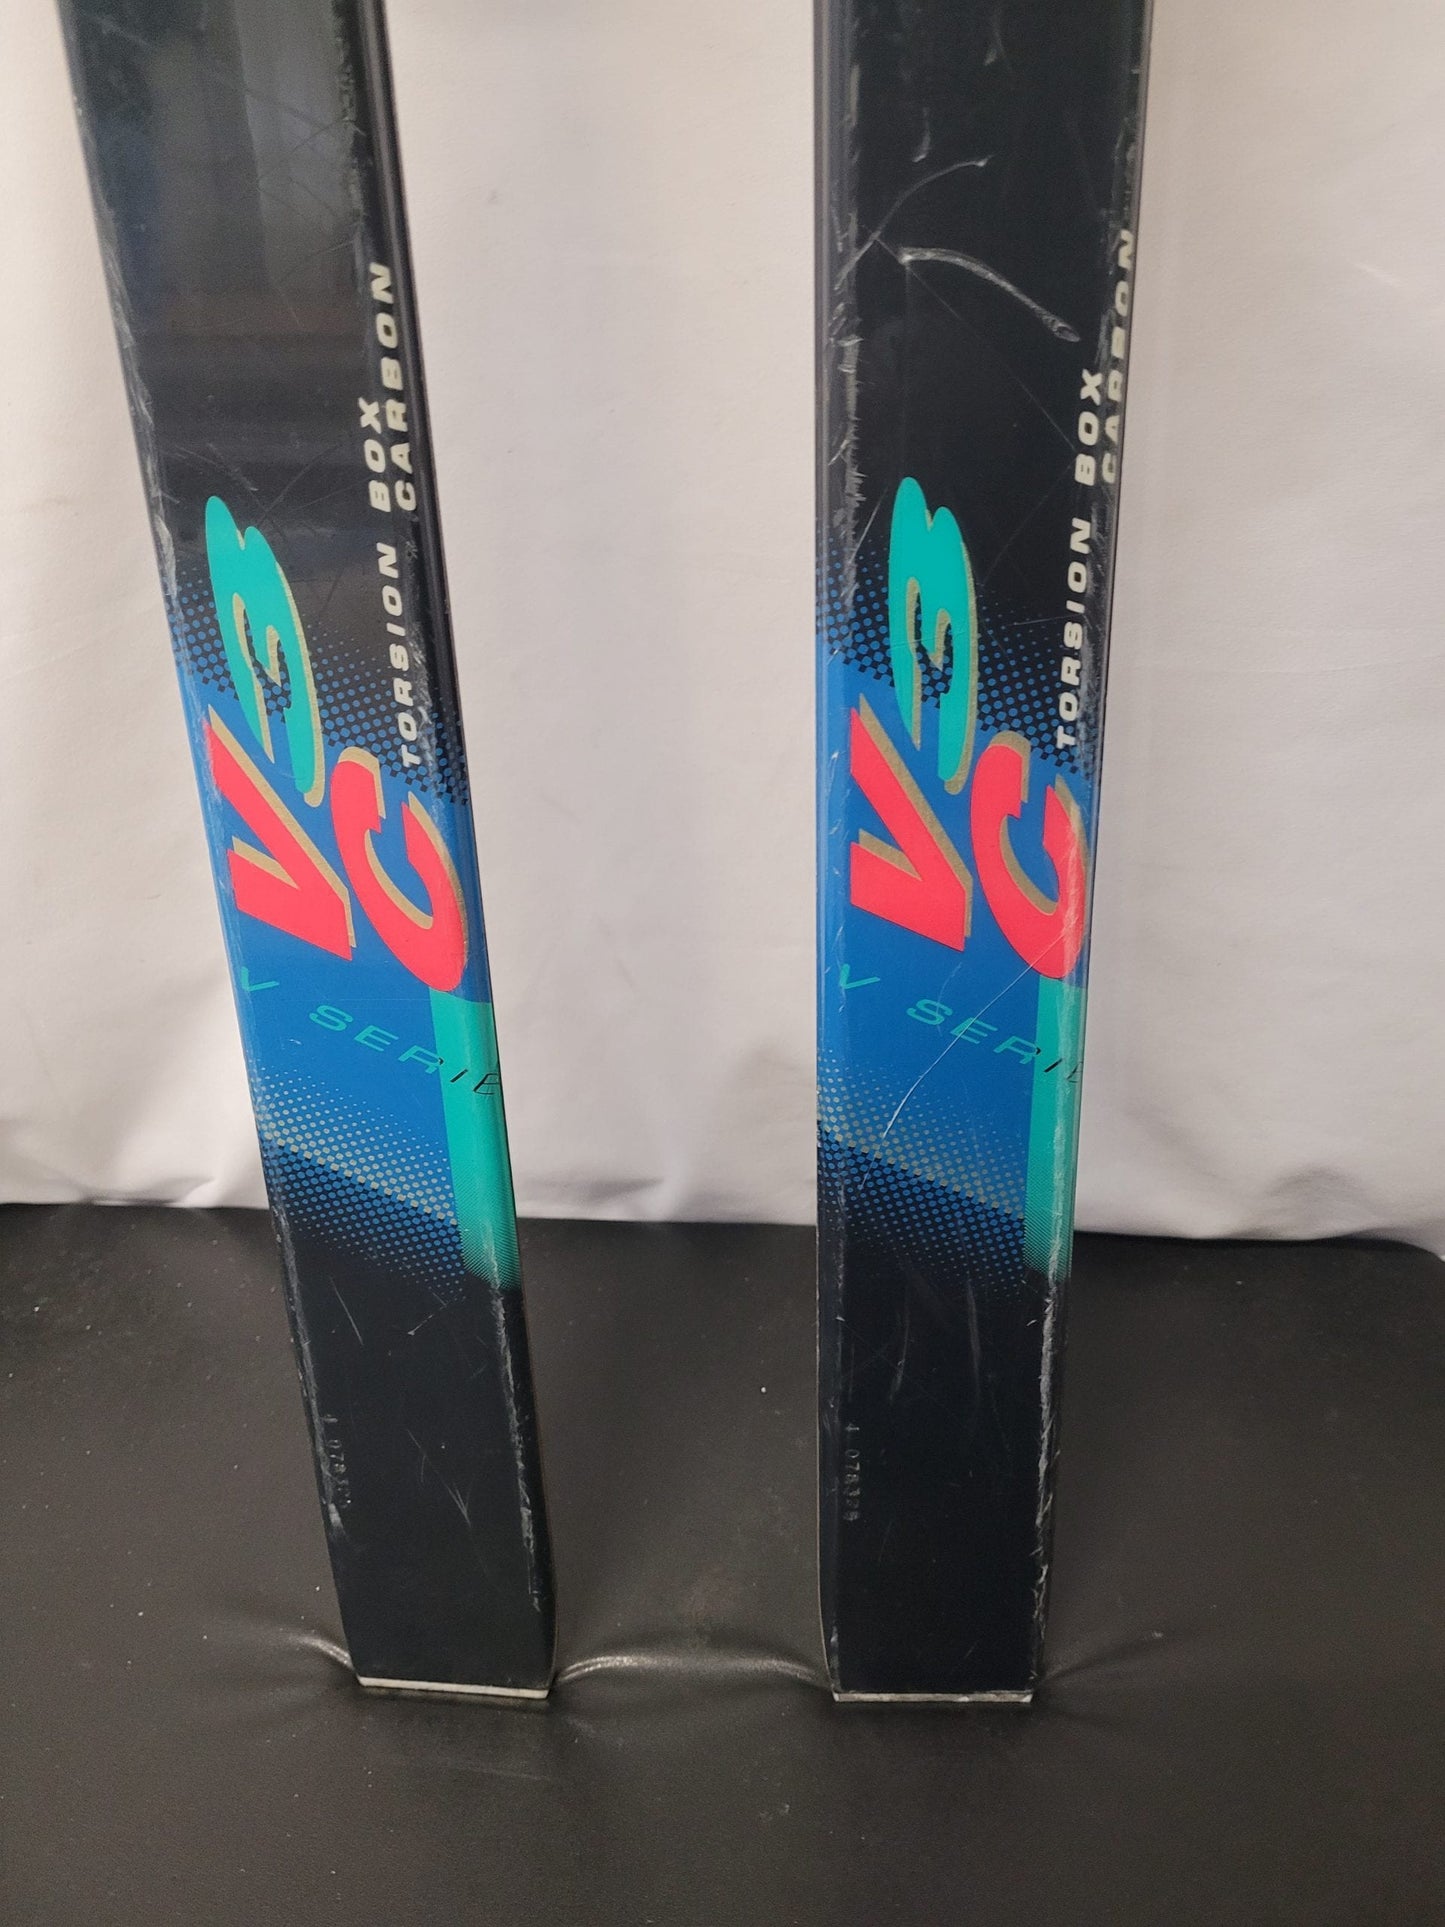 Rossignol VC3 Carbon Skis 188cm with FD7 Binding (1 Broken Binding)